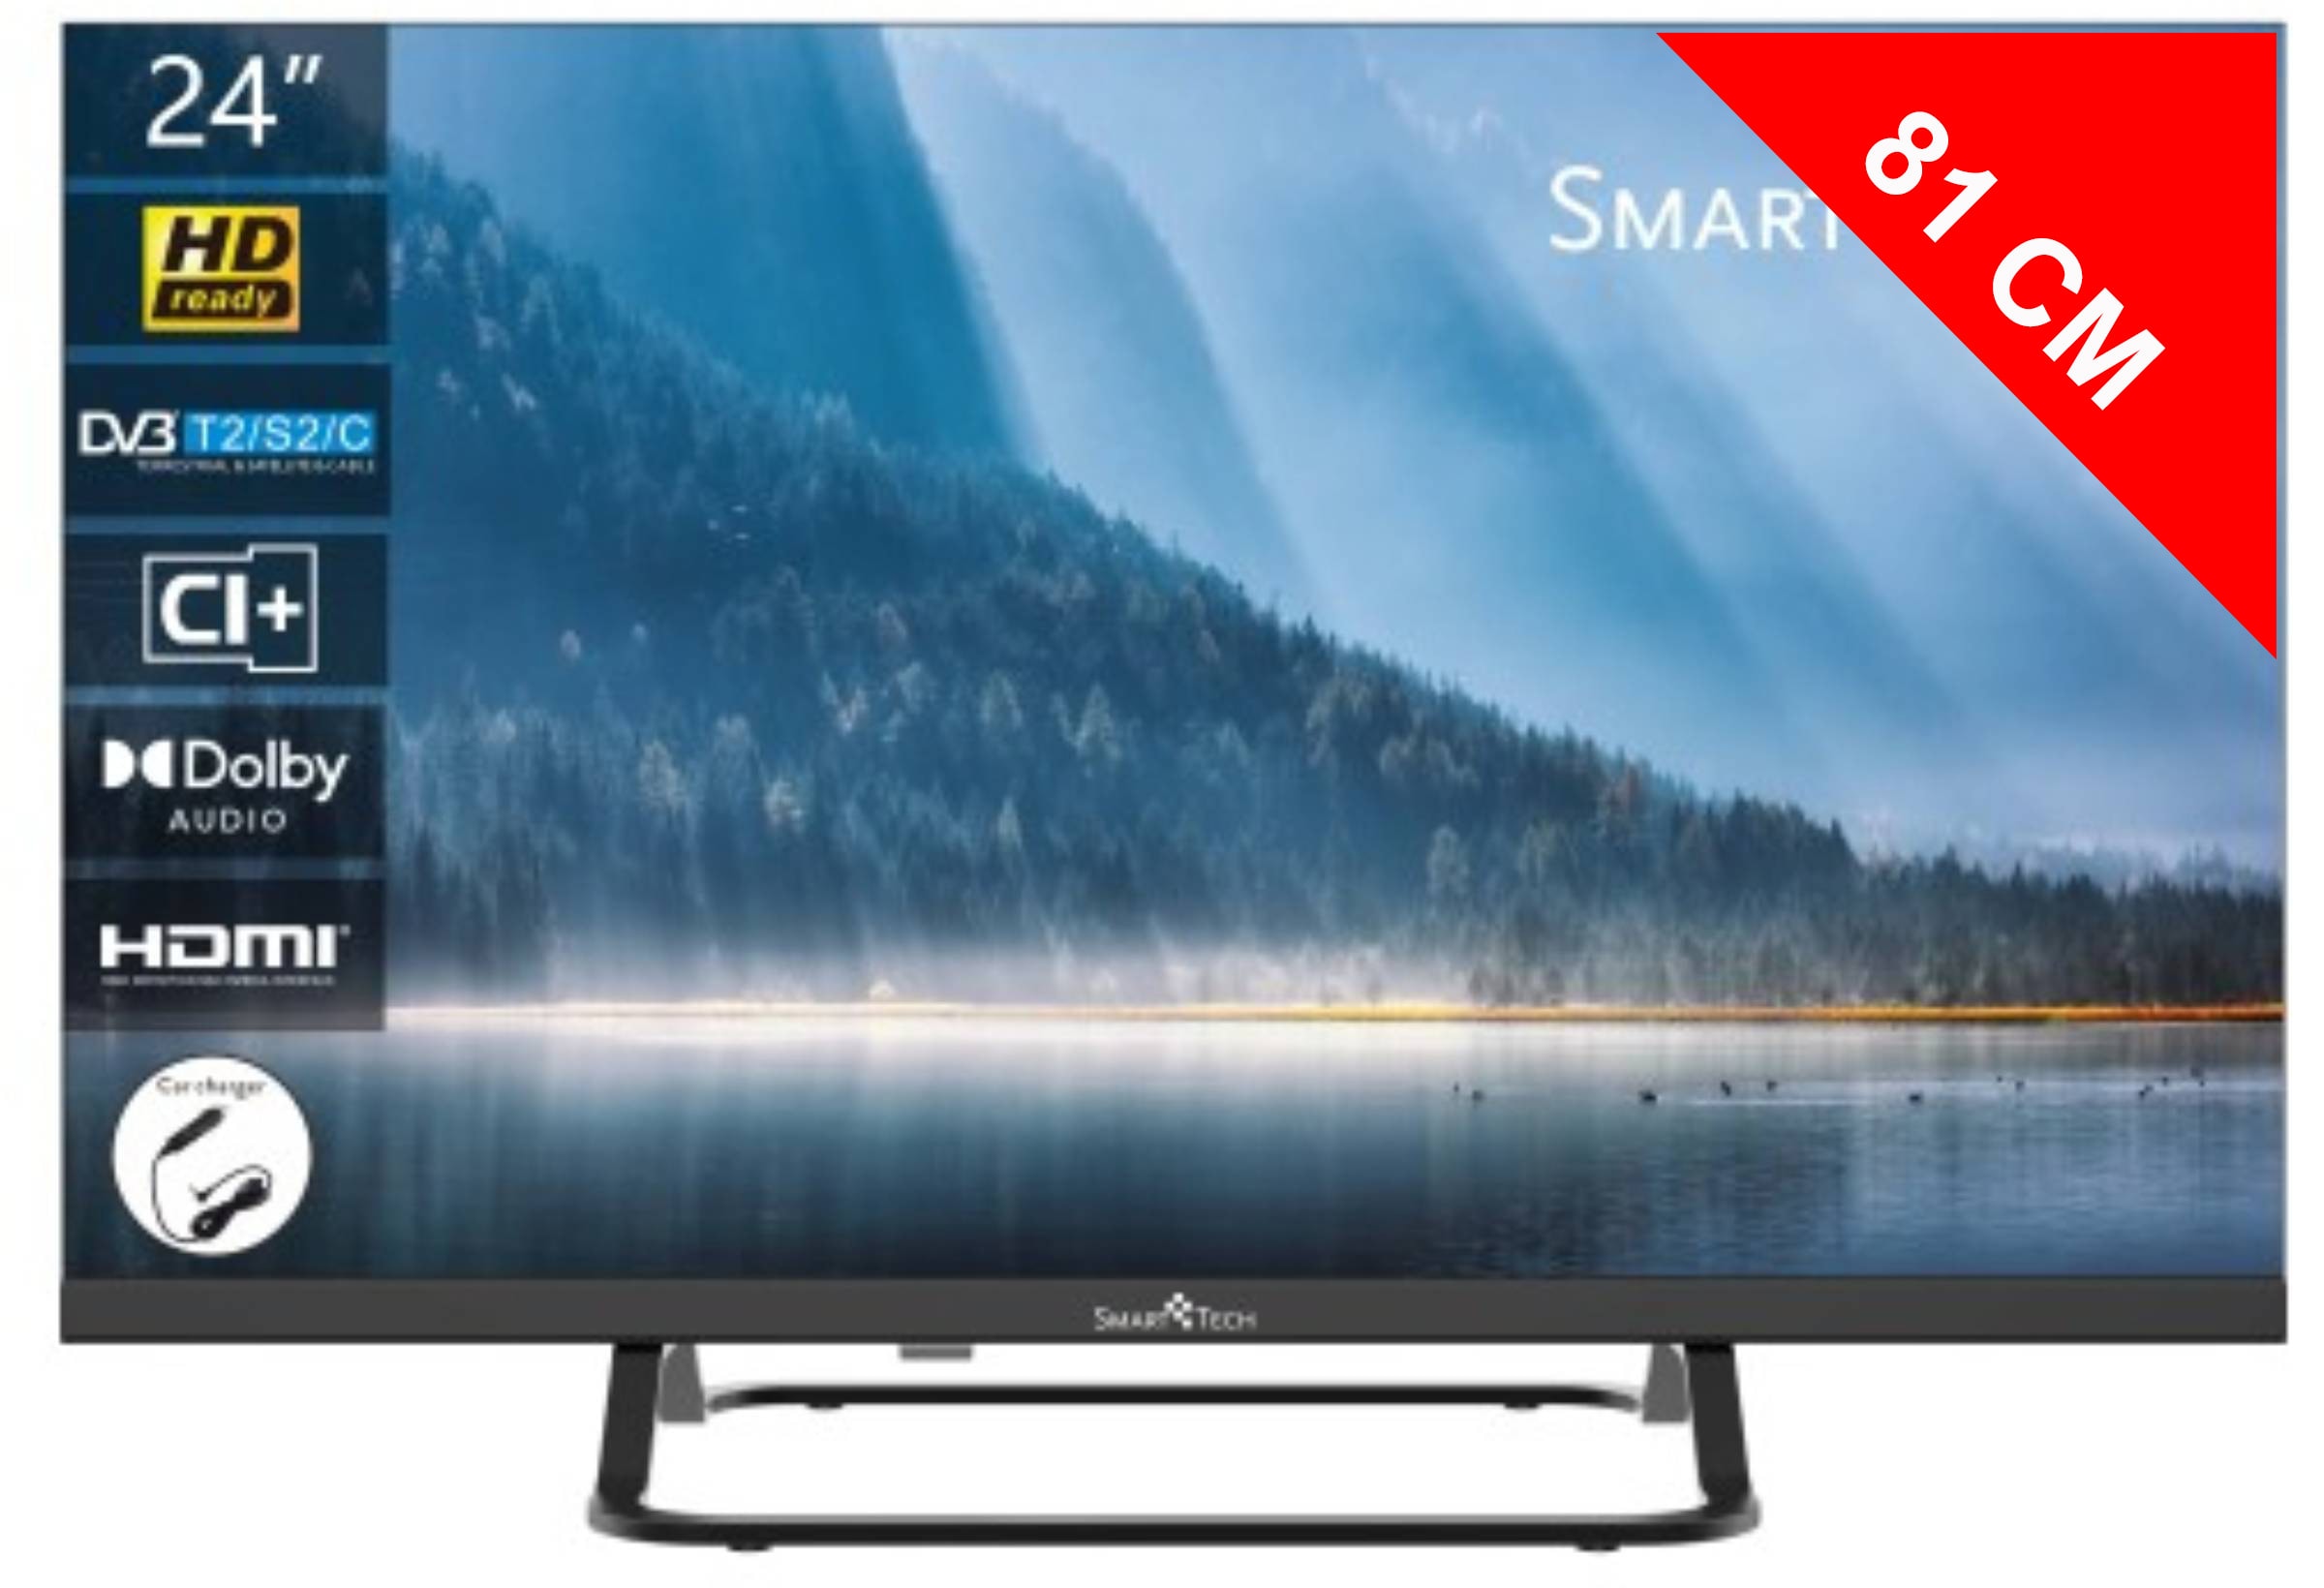 SMART TECH TV LED 81 cm HD Ready 32"  32HN01V